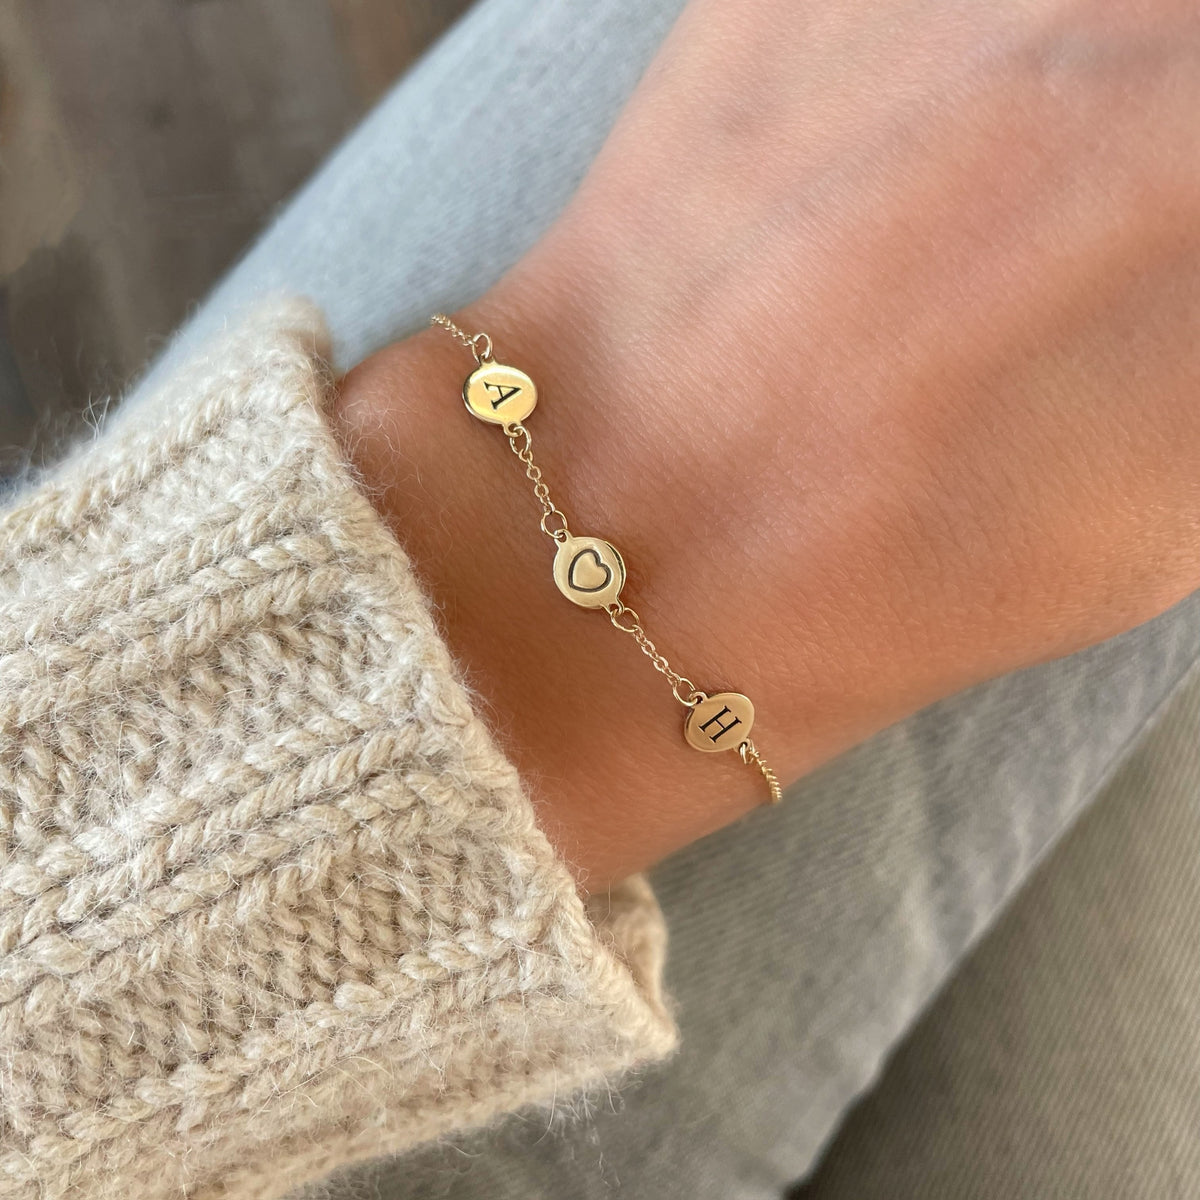 Latest Designs 14K O Letter Heart with Love Gold Bracelet